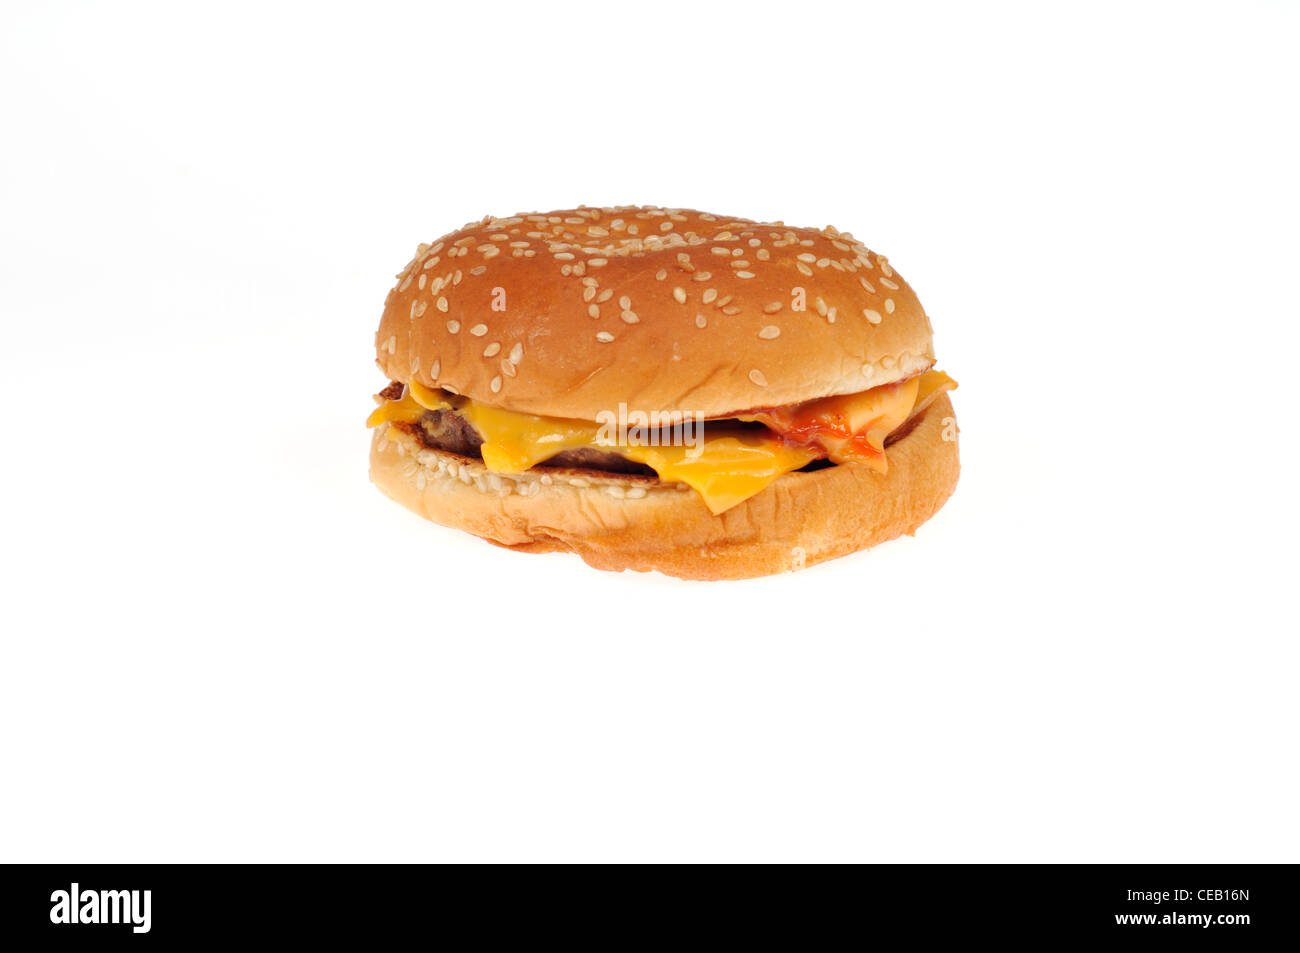 Burger King, Doble cheeseburger en EE.UU. Recorte de fondo blanco. Foto de stock